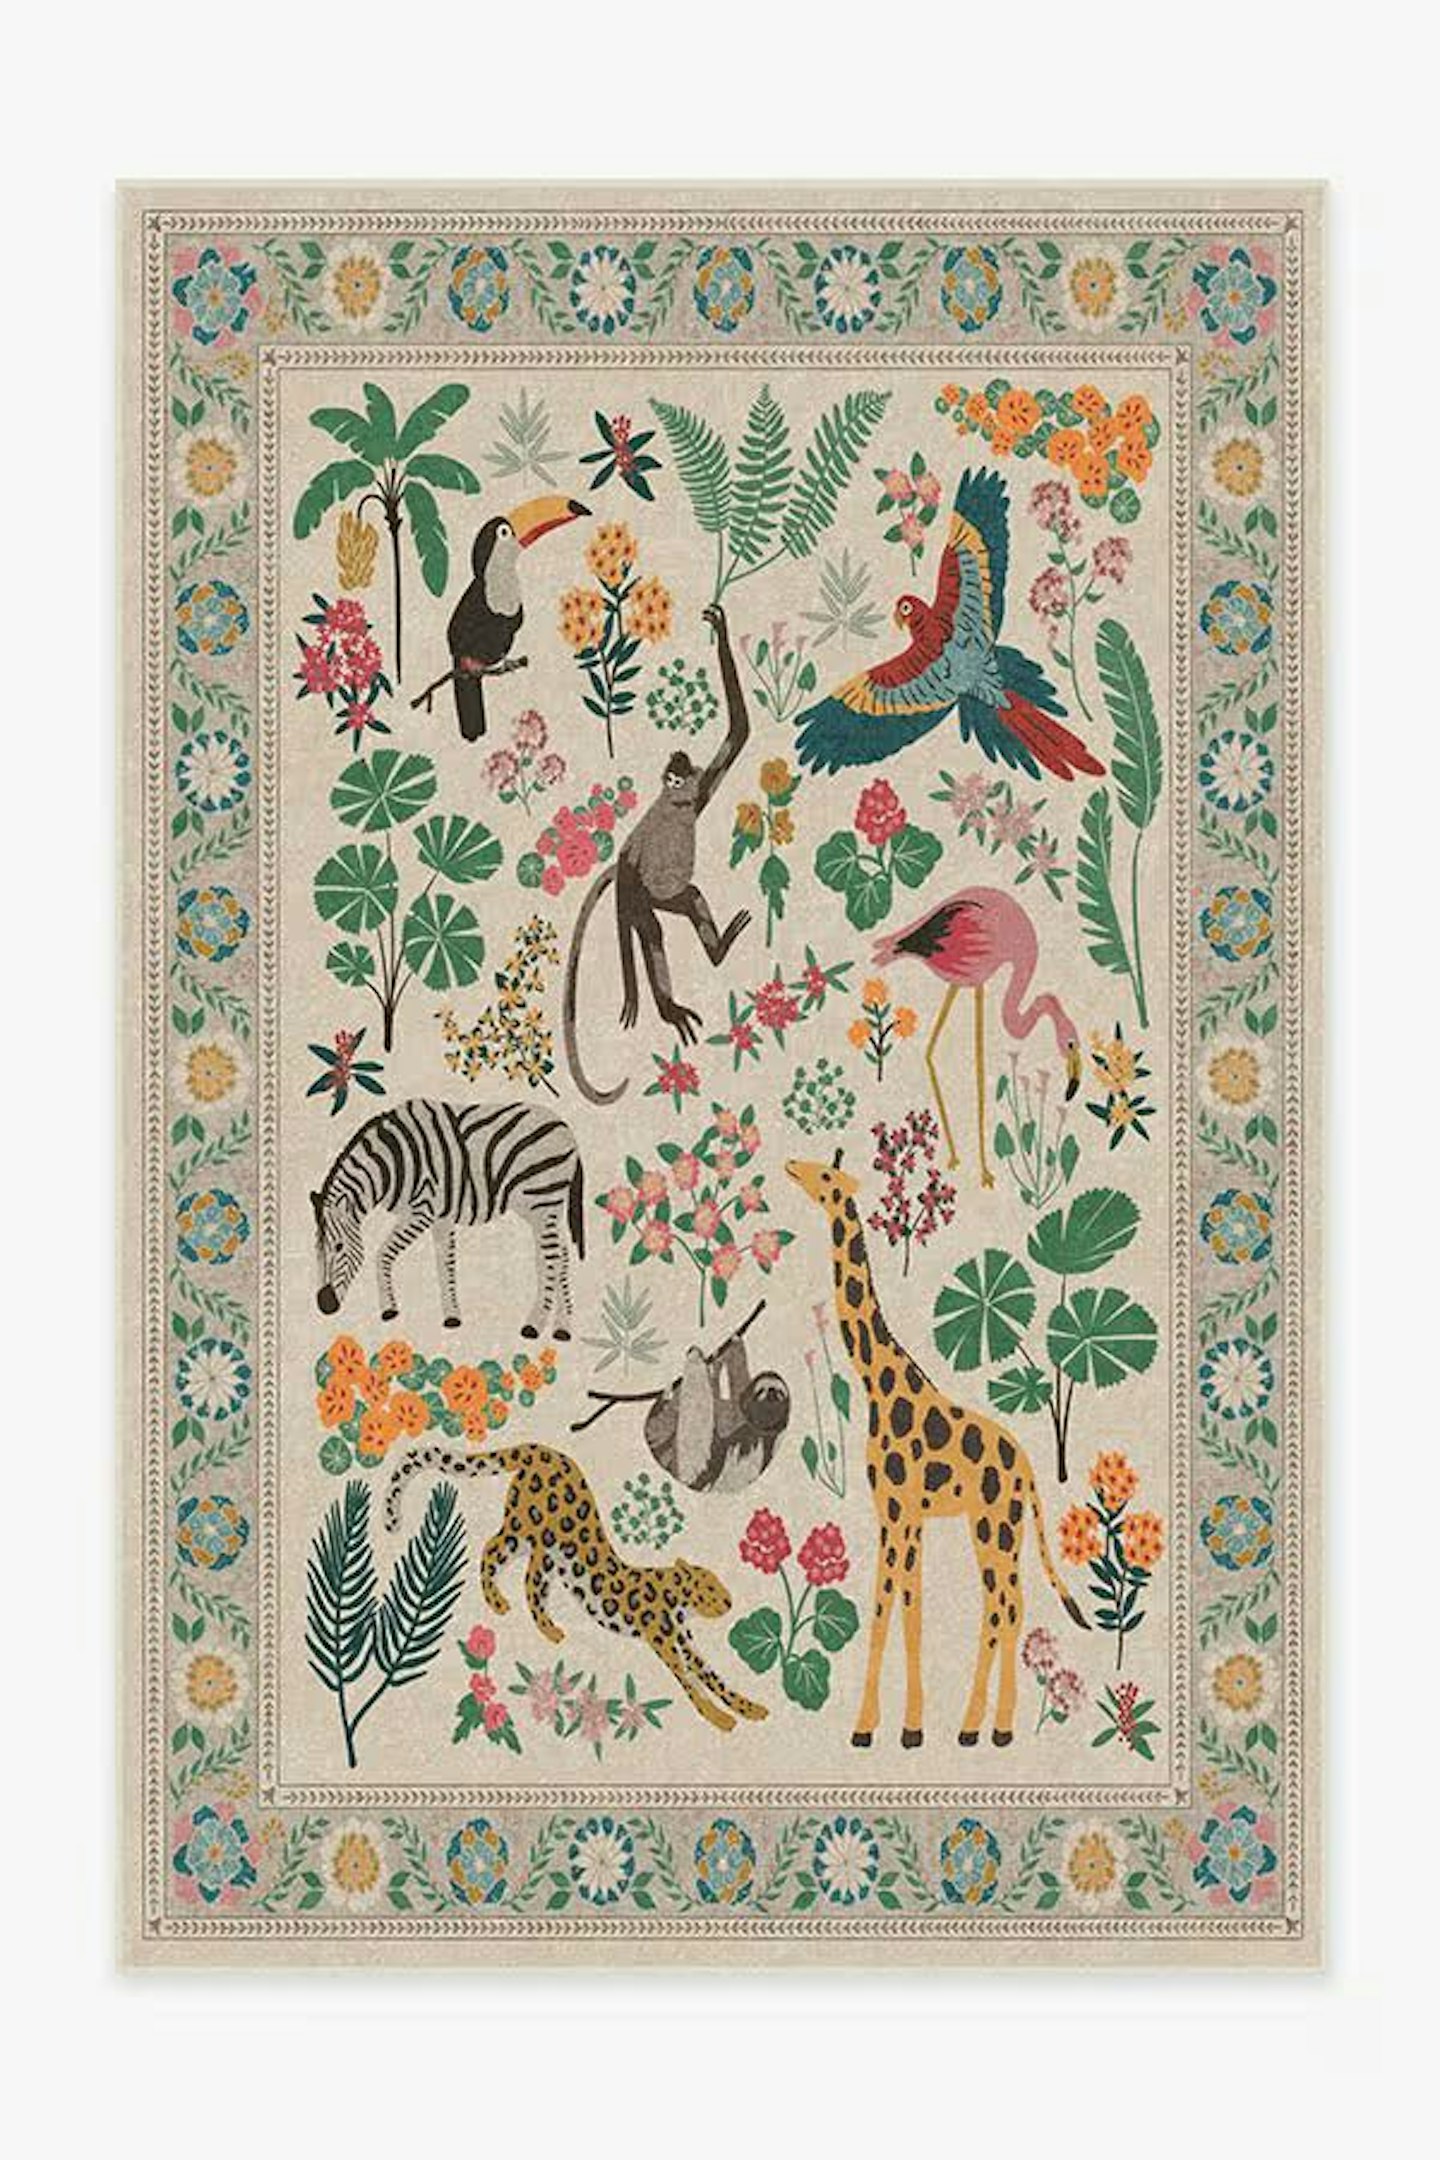 Iris Apfel designed animal Ruggable rug